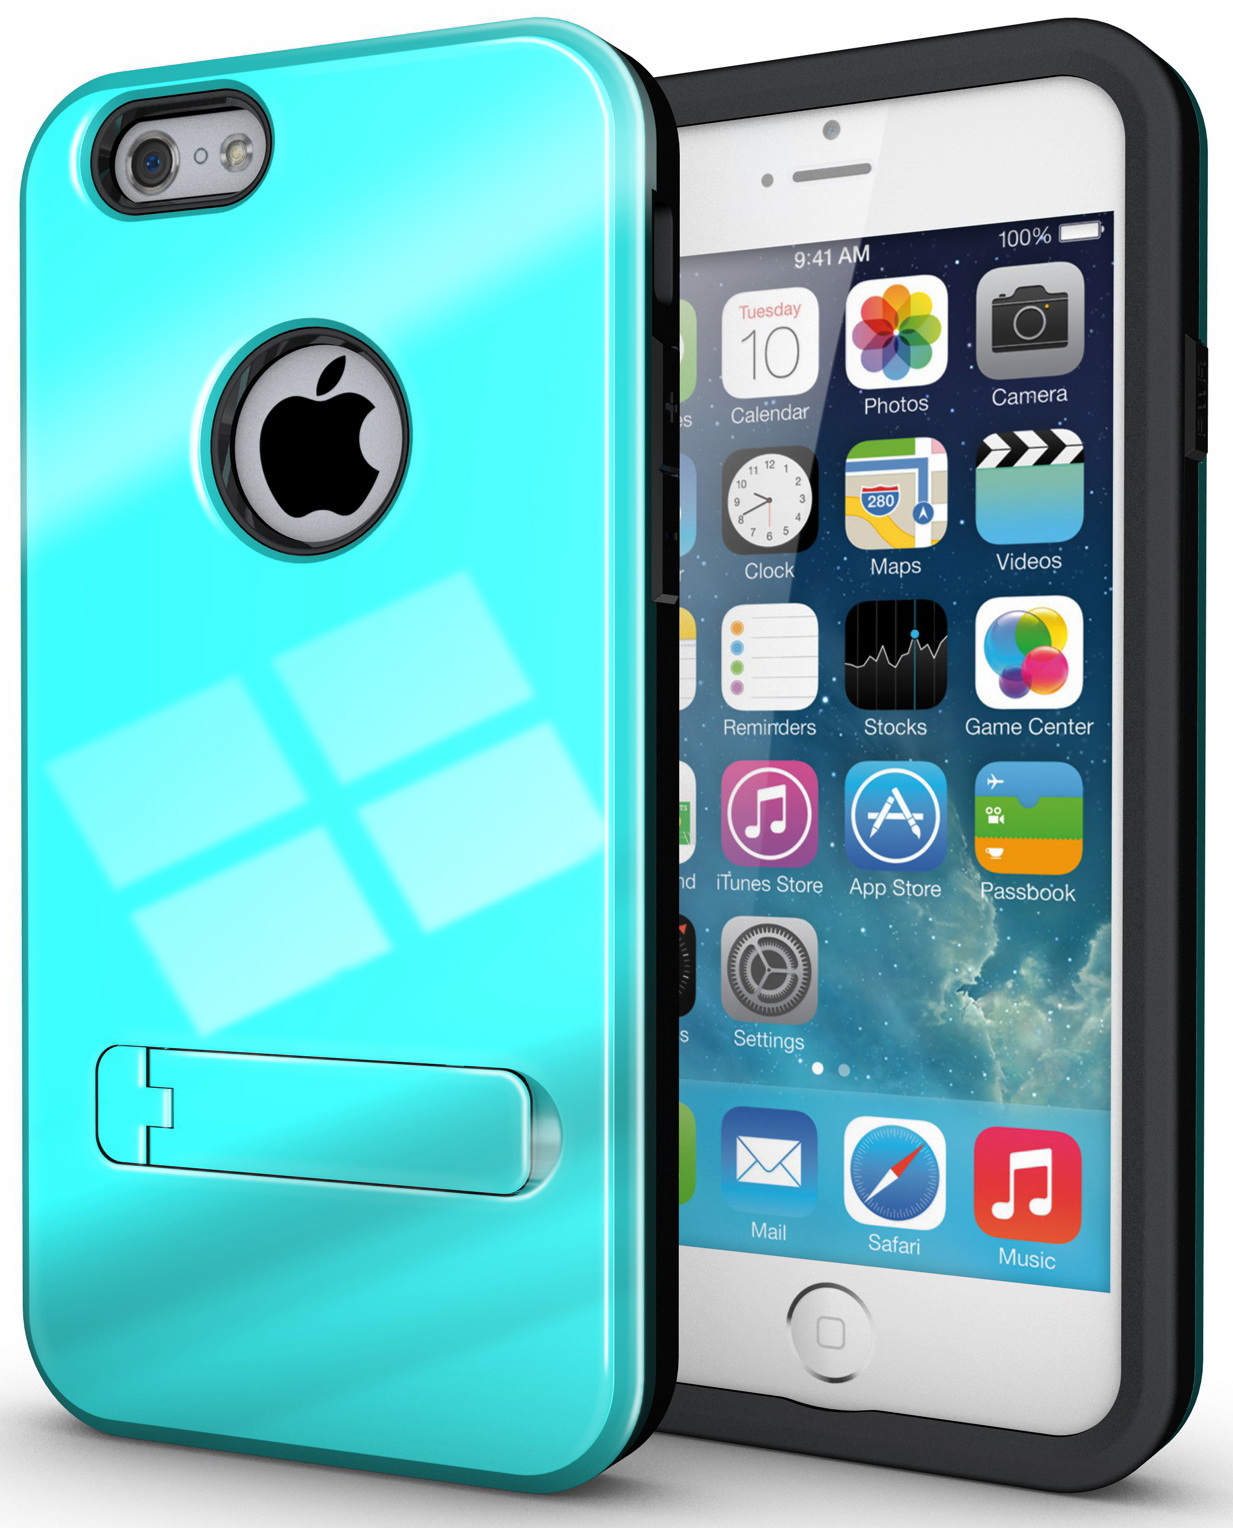 Nakedcellphone SKY BLUE SLIM TOUGH SHIELD GLOSSY ARMOR HYBRID CASE COVER SKIN FOR iPHONE 6 4.7"